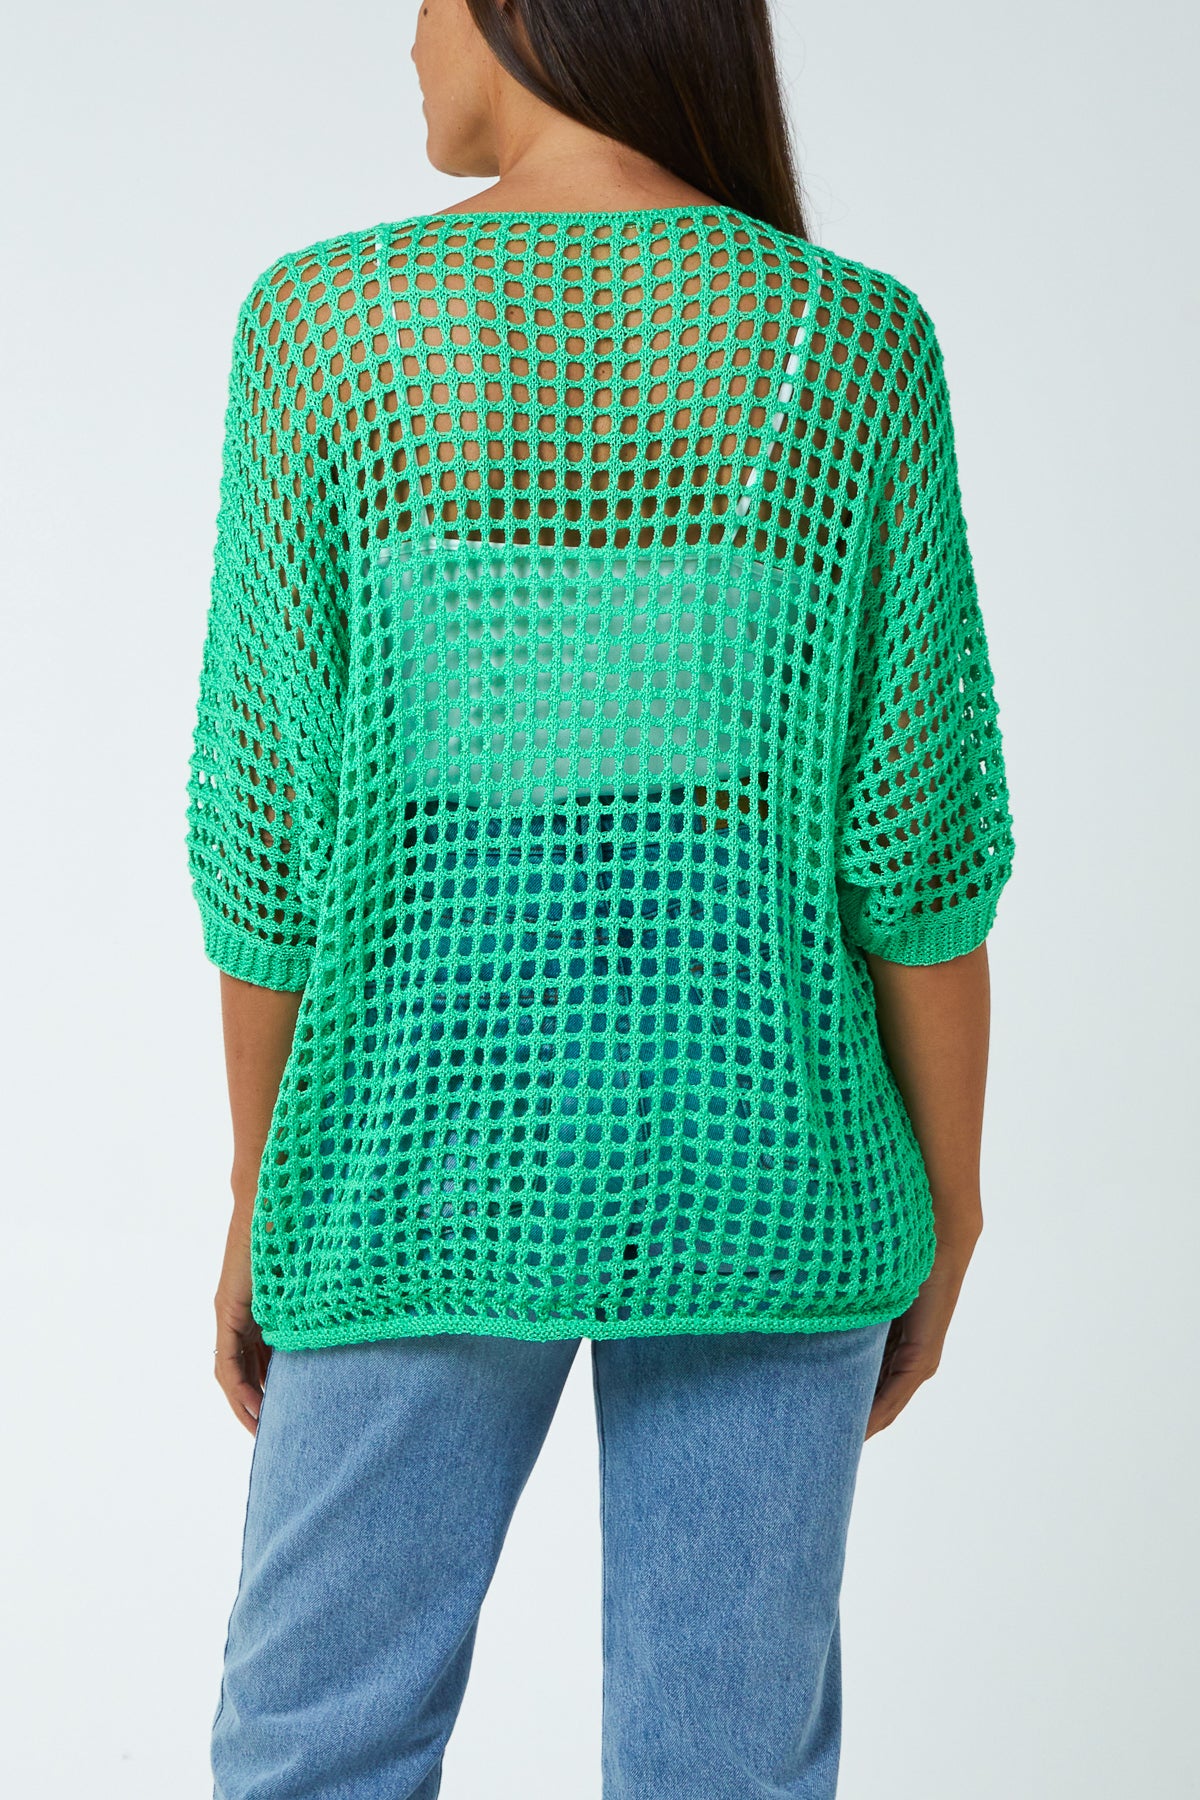 Round Neck Short Sleeve Crochet Top